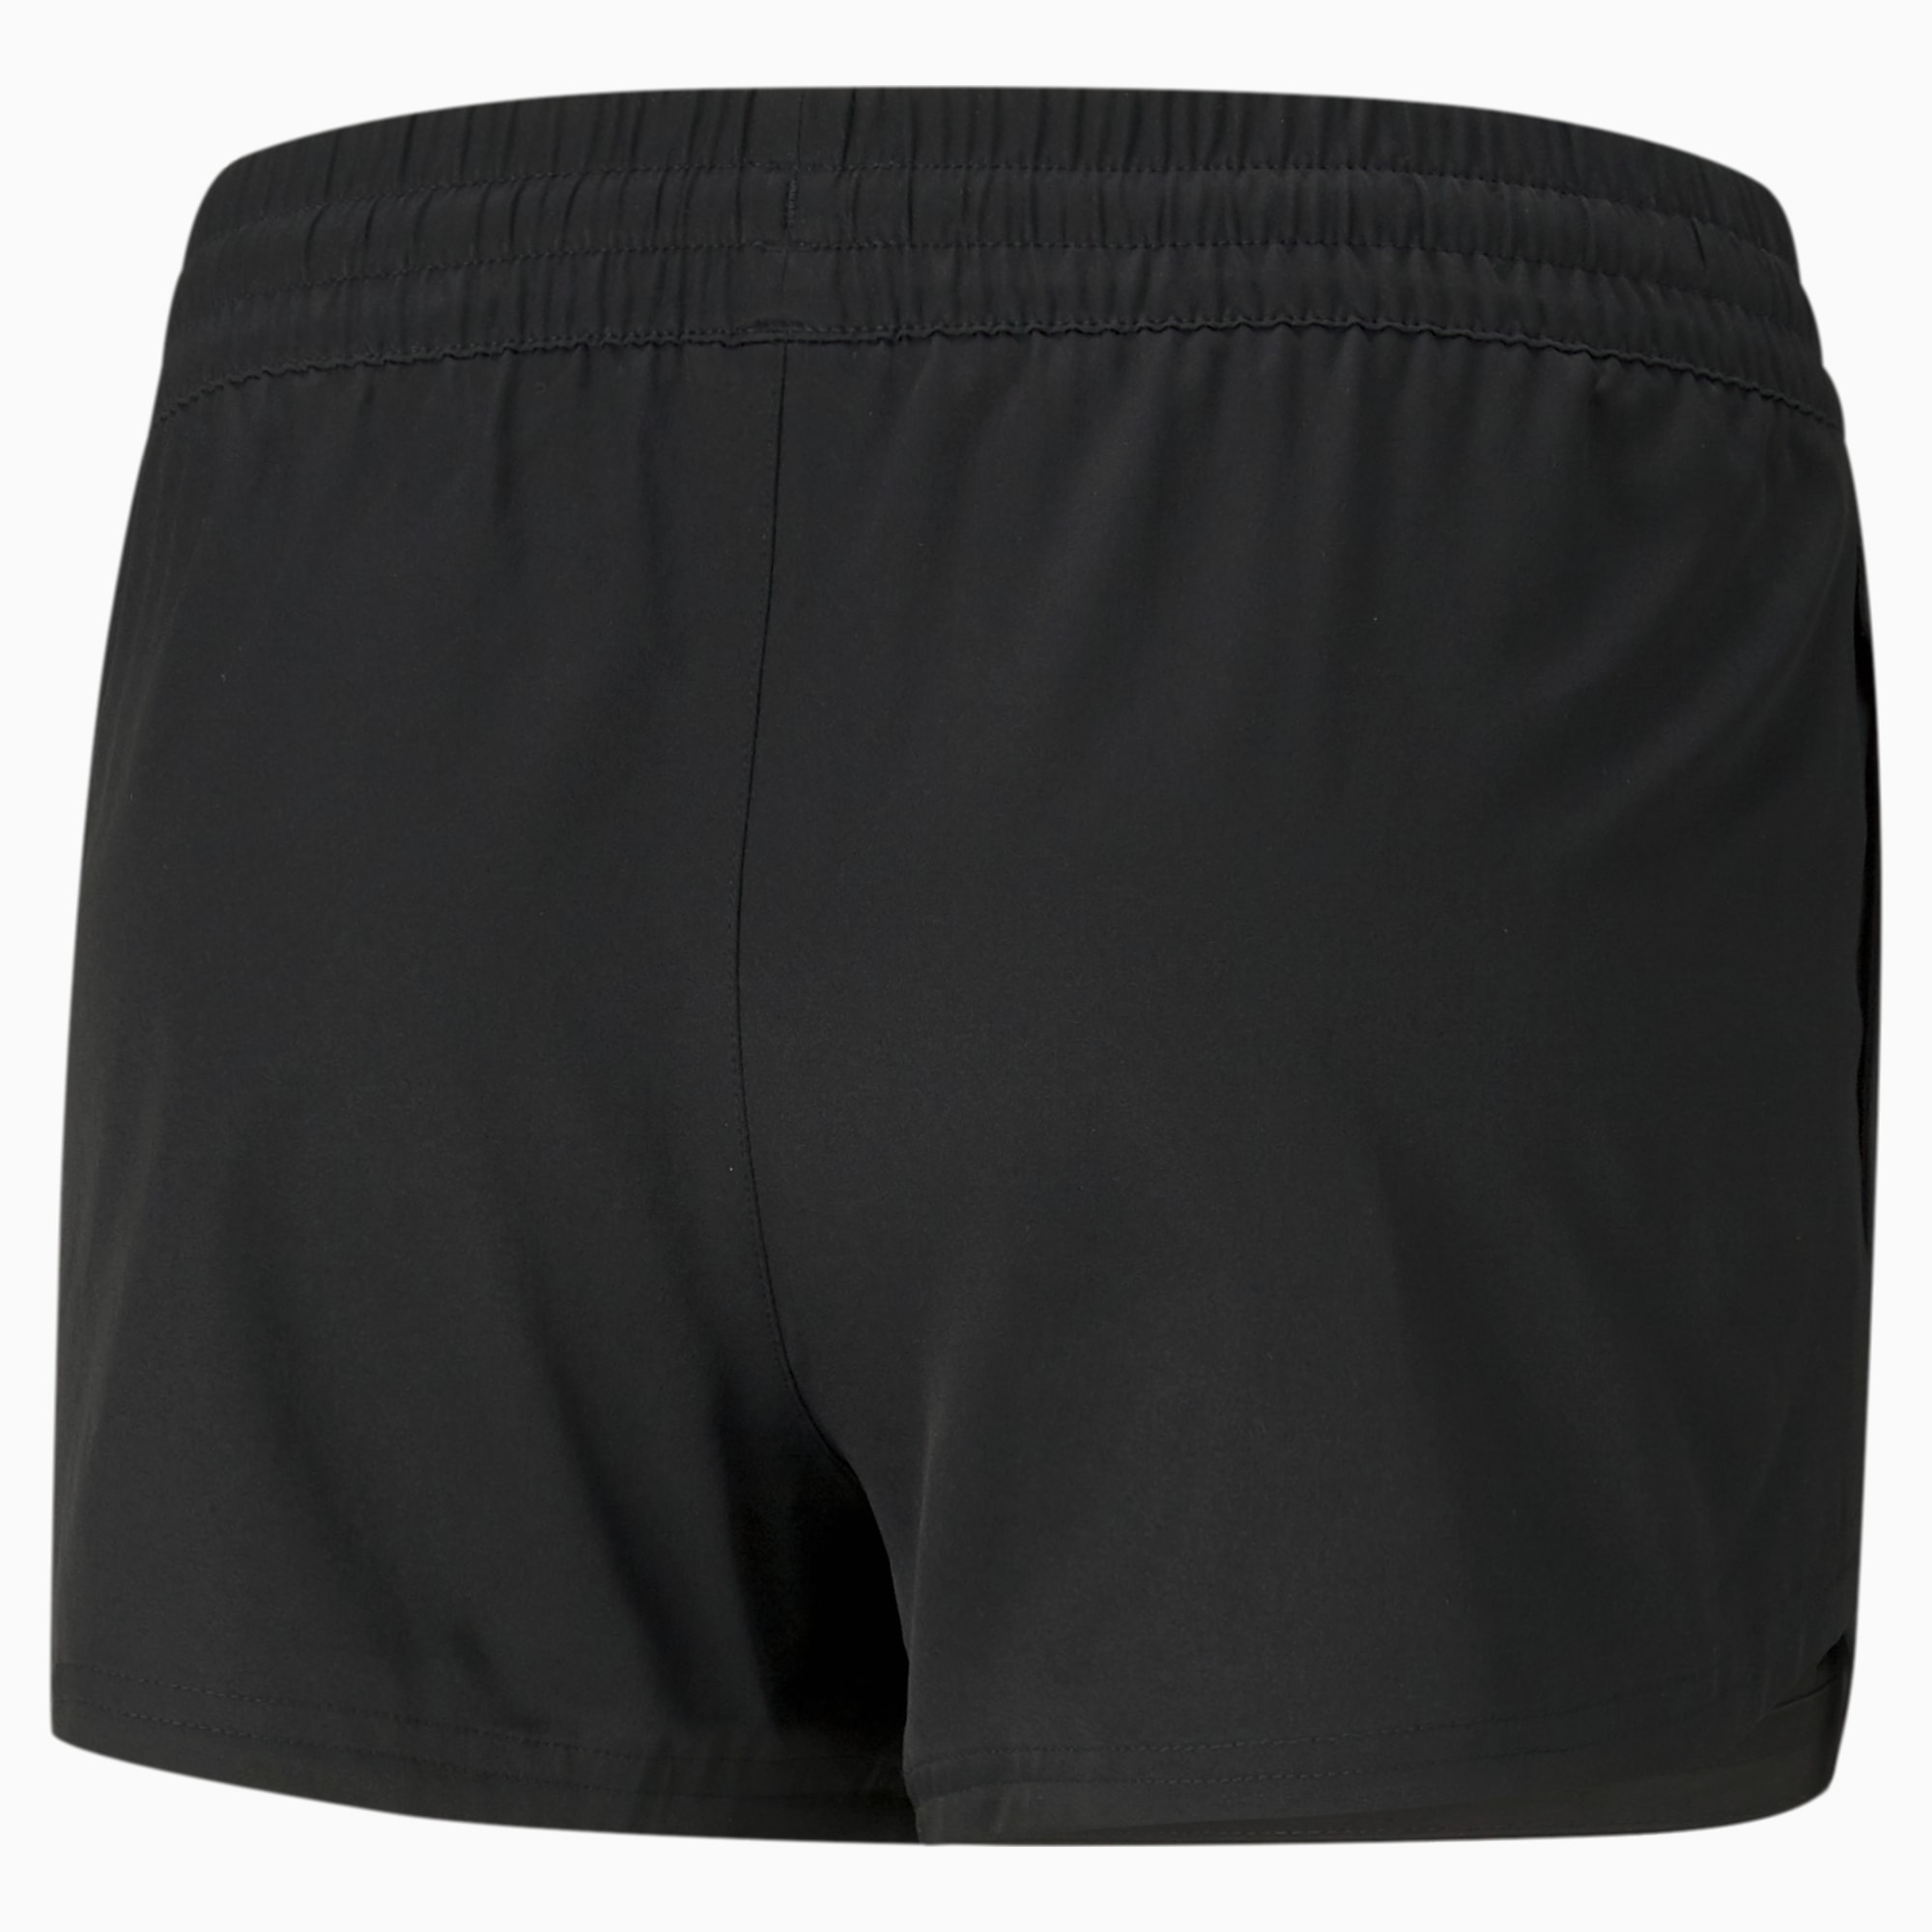 PUMA Performance Woven 3 Women's Training Shorts, Black, Size M, Clothing